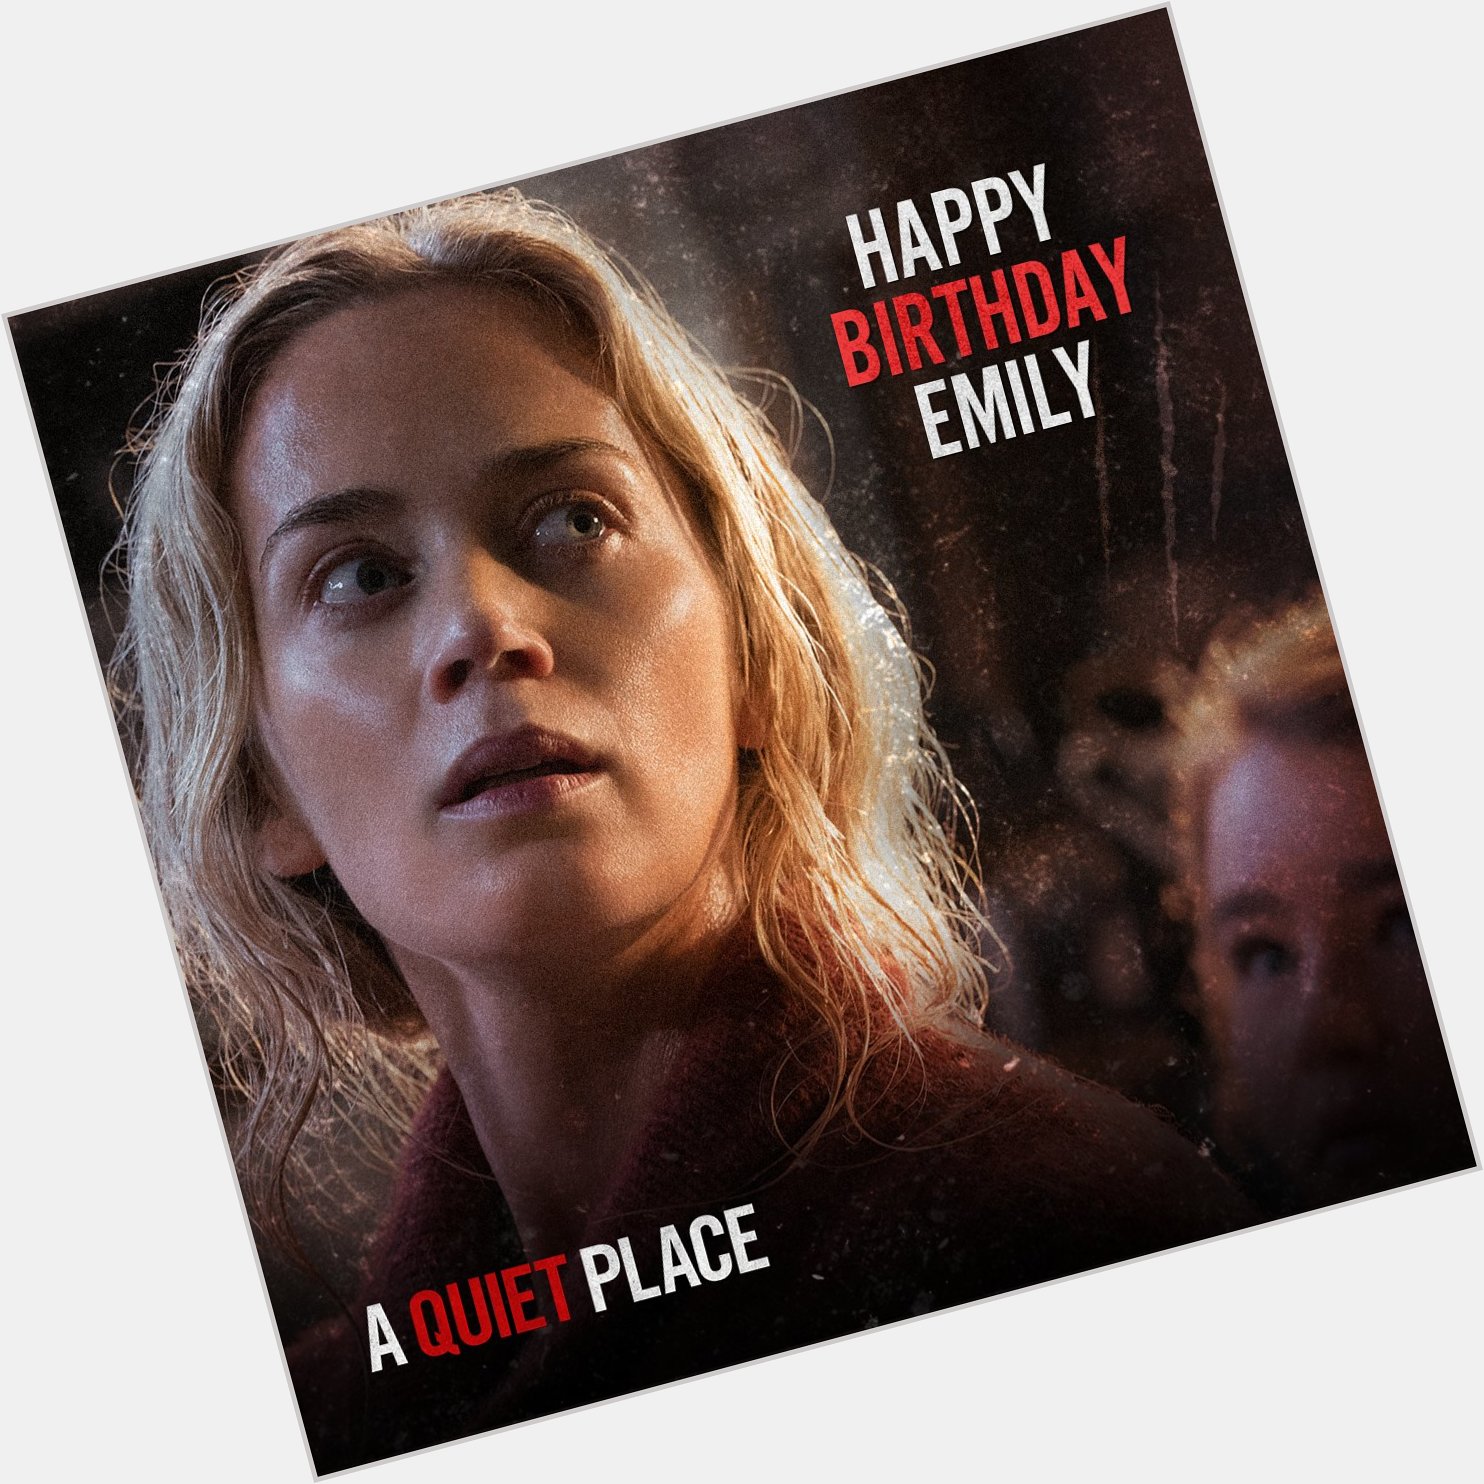 Happy Birthday Emily Blunt! Best to keep the celebrations quiet...  